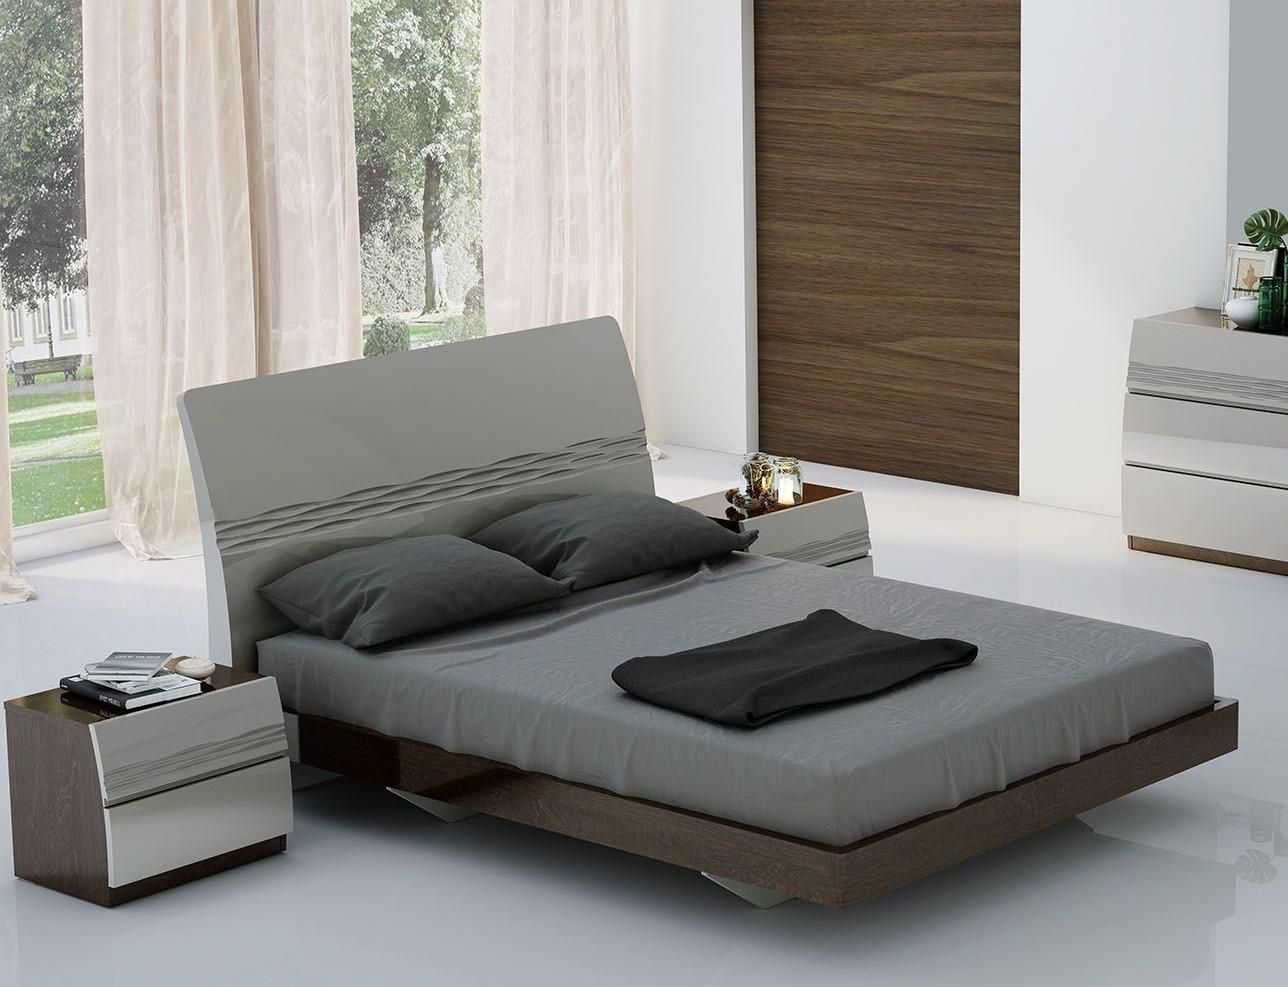 

    
American Eagle Furniture B-P102-EK Platform Bedroom Set Light Gray/Brown B-P102-EK Set-4
